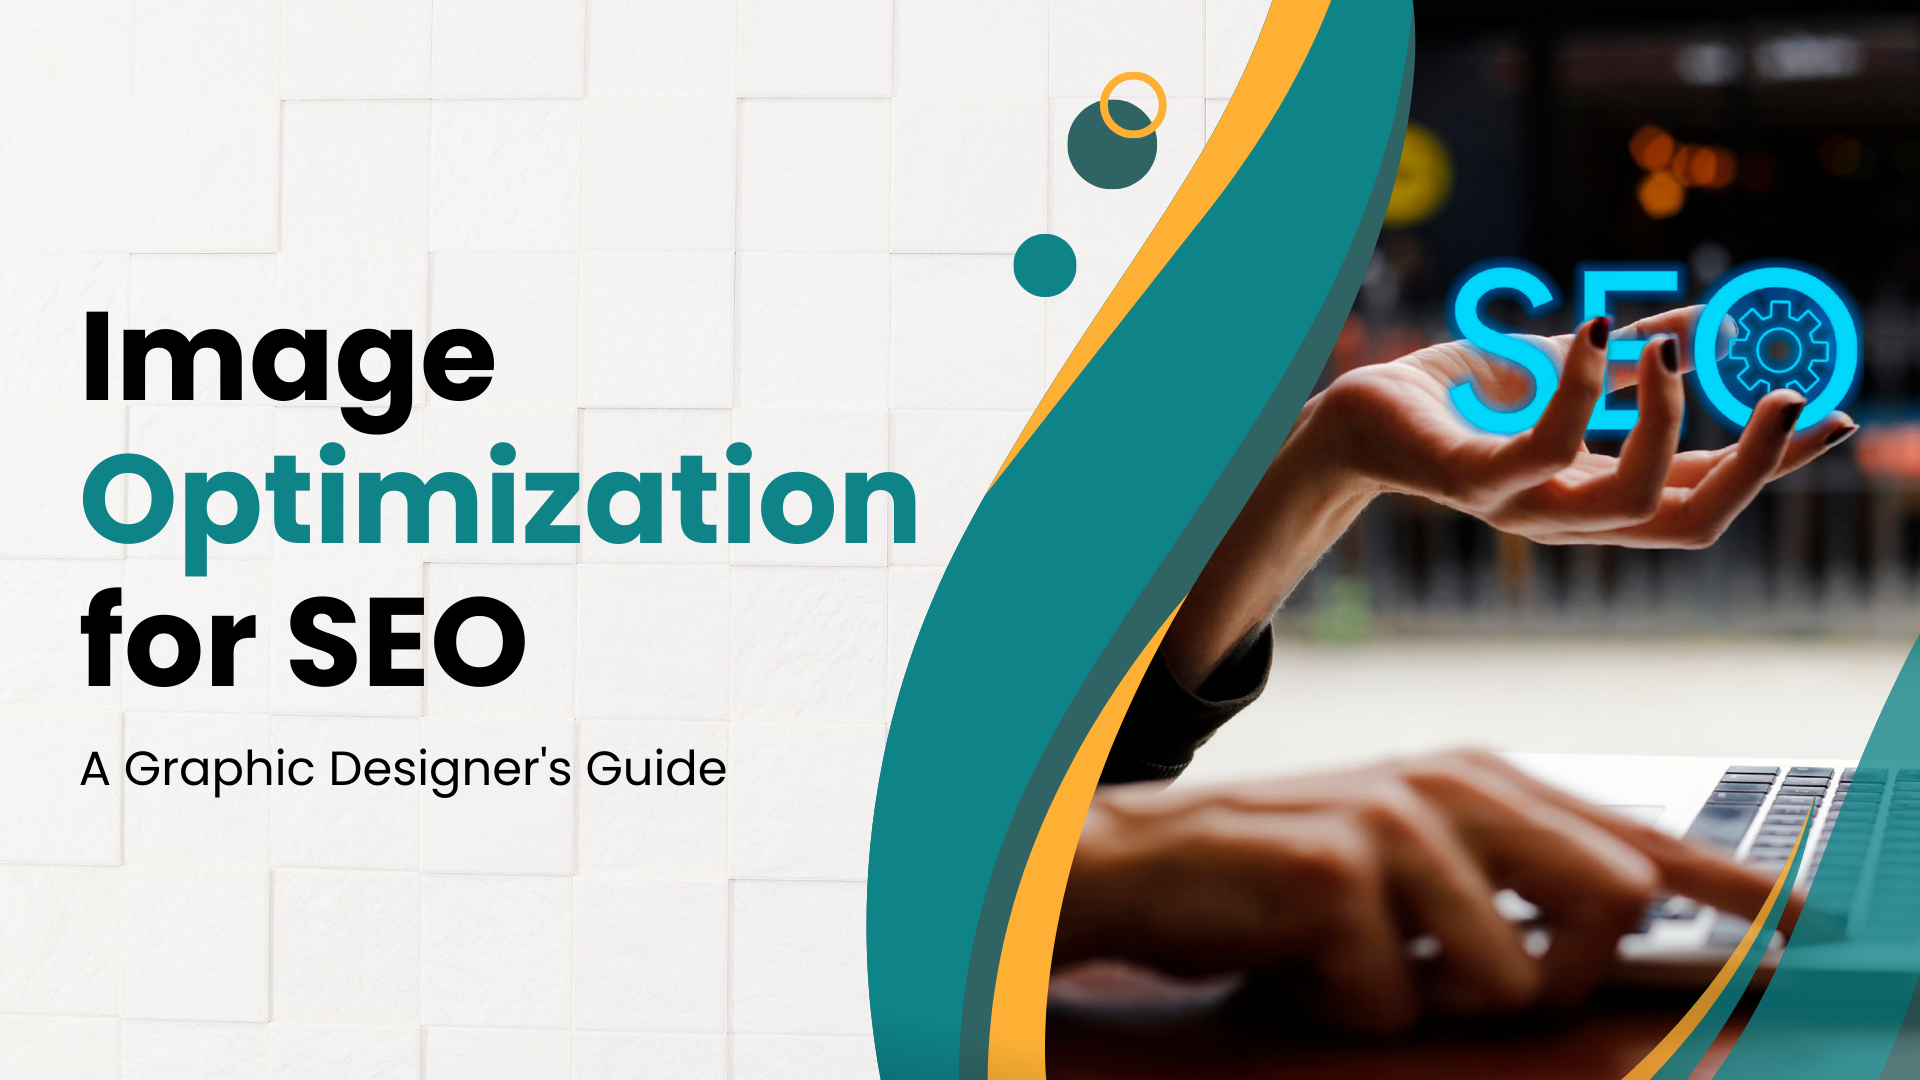 Image Optimization for SEO: A Graphic Designer's Guide